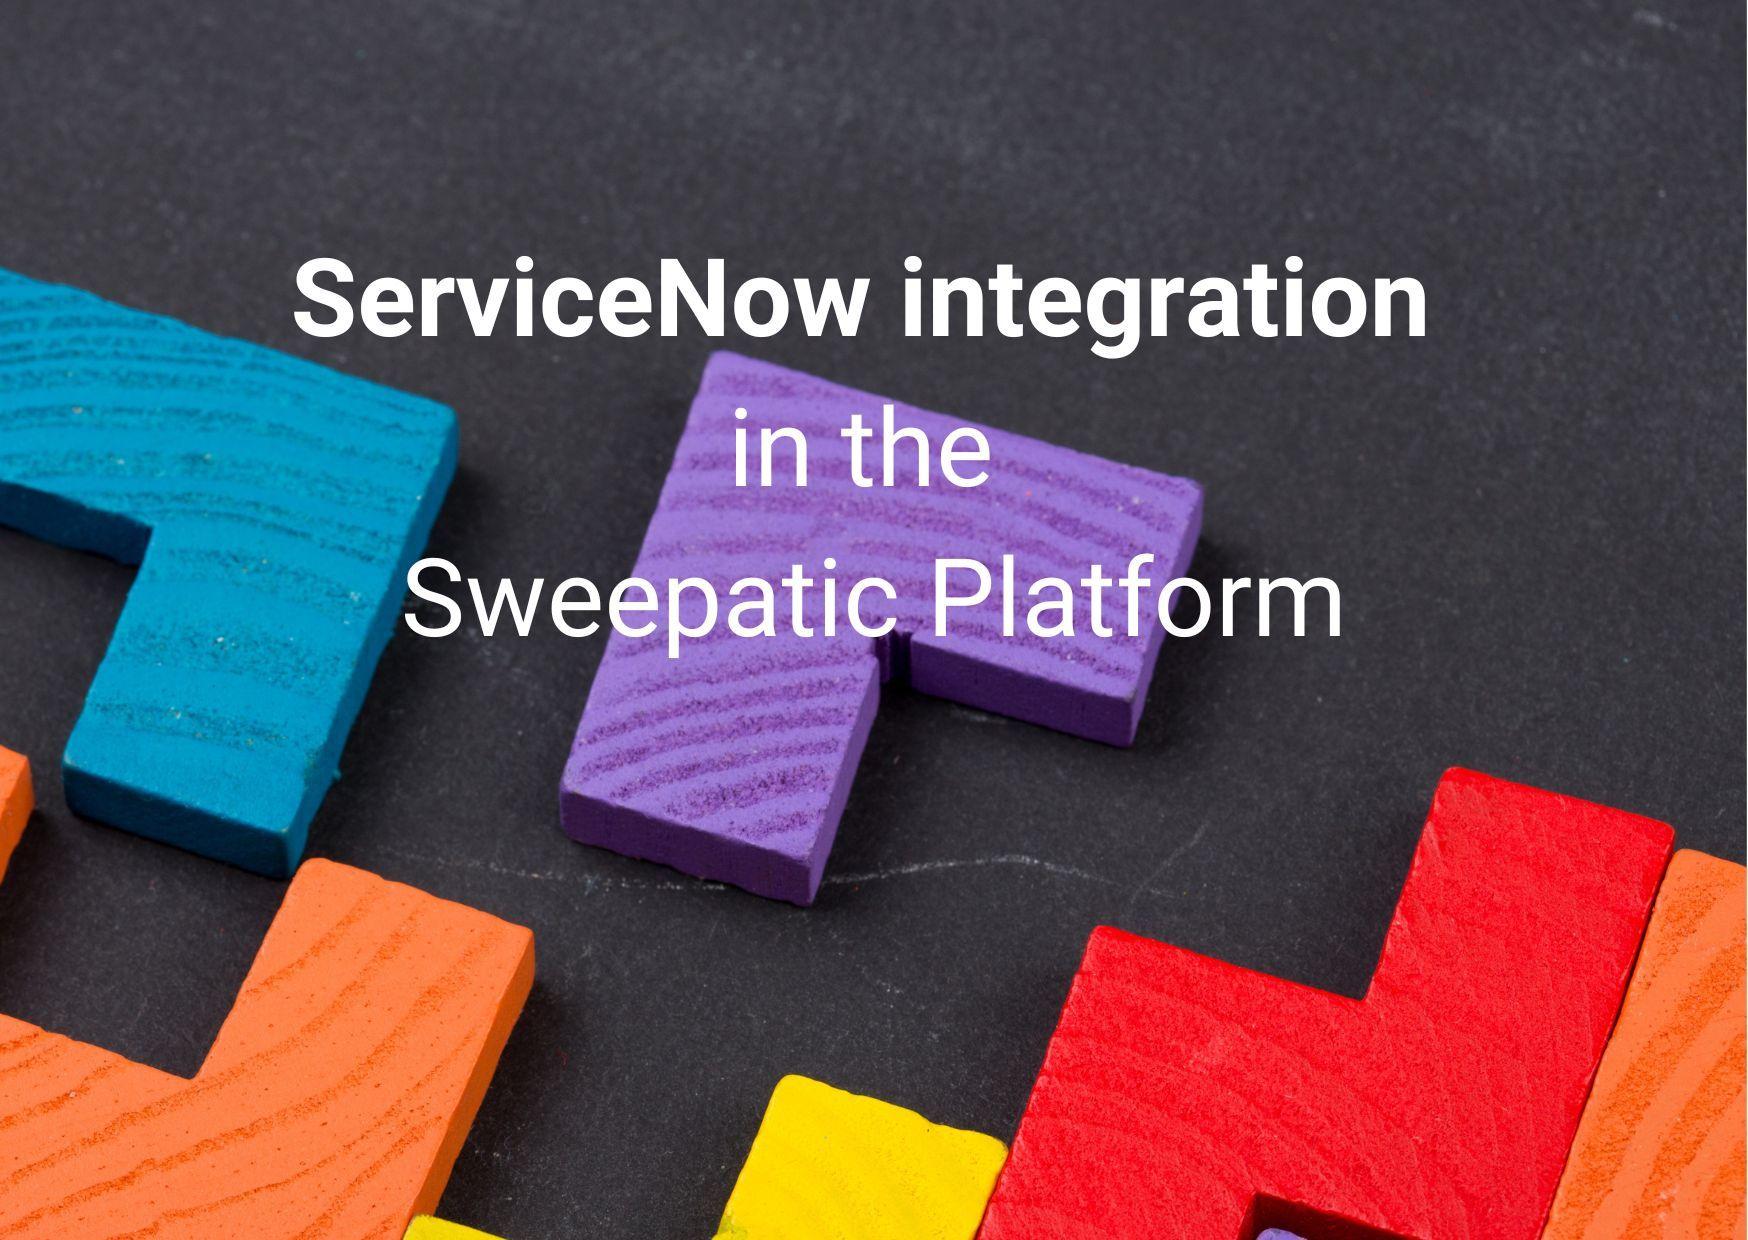 Sweepatic EASM Platform offers ServiceNow integration